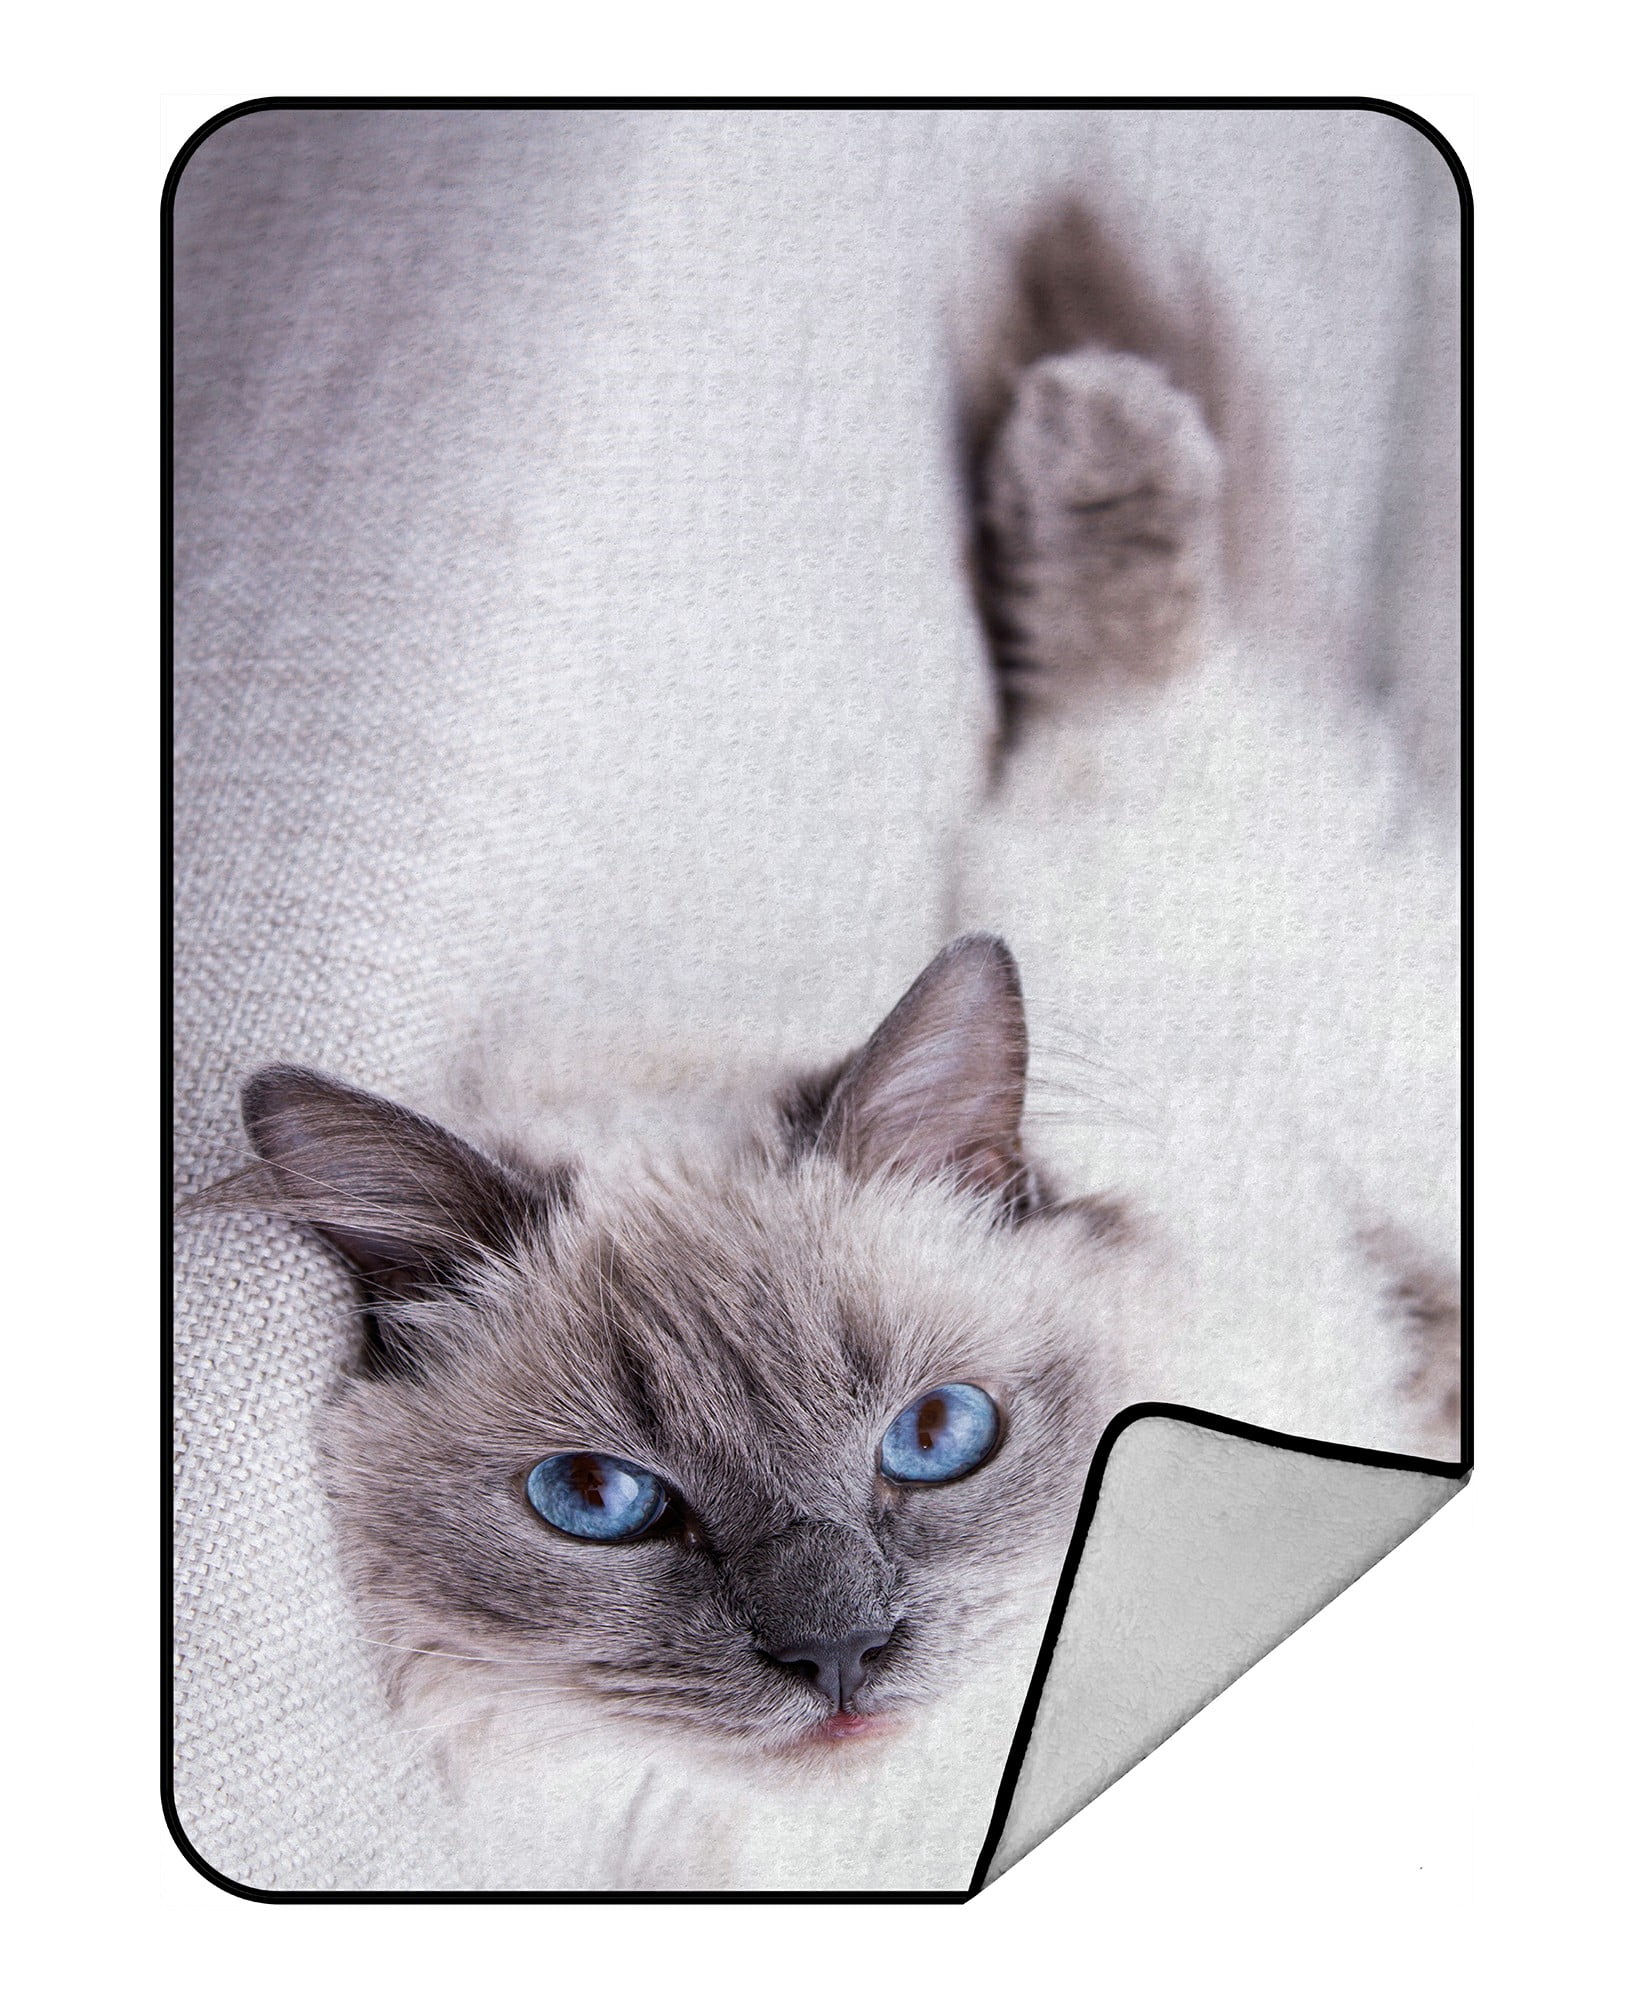 ECZJNT Blue Ragdoll cat lying on the couch Throw Blanket Fleece